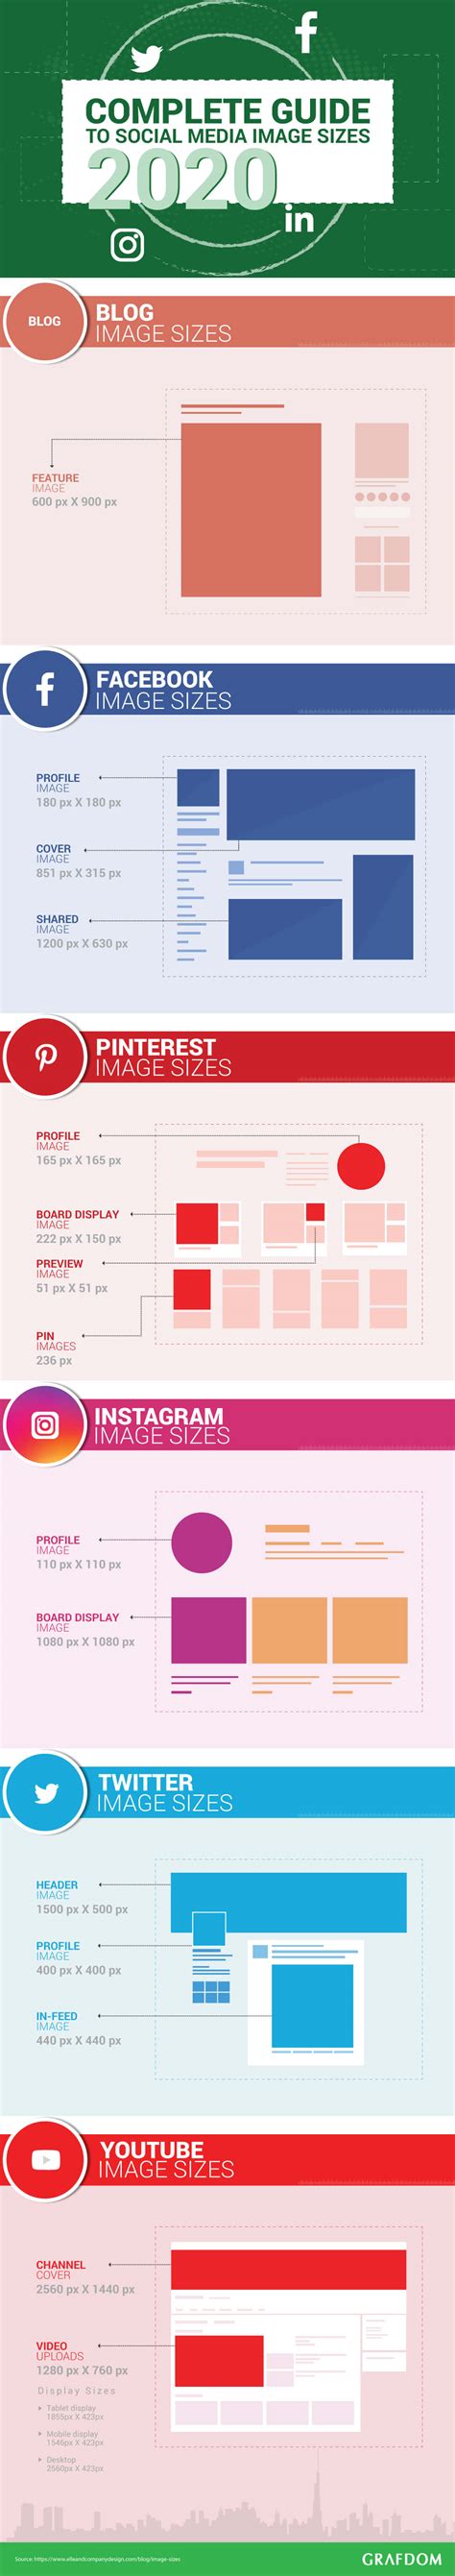 Social Media Image Sizes 2020 Cheat Sheet Infographic